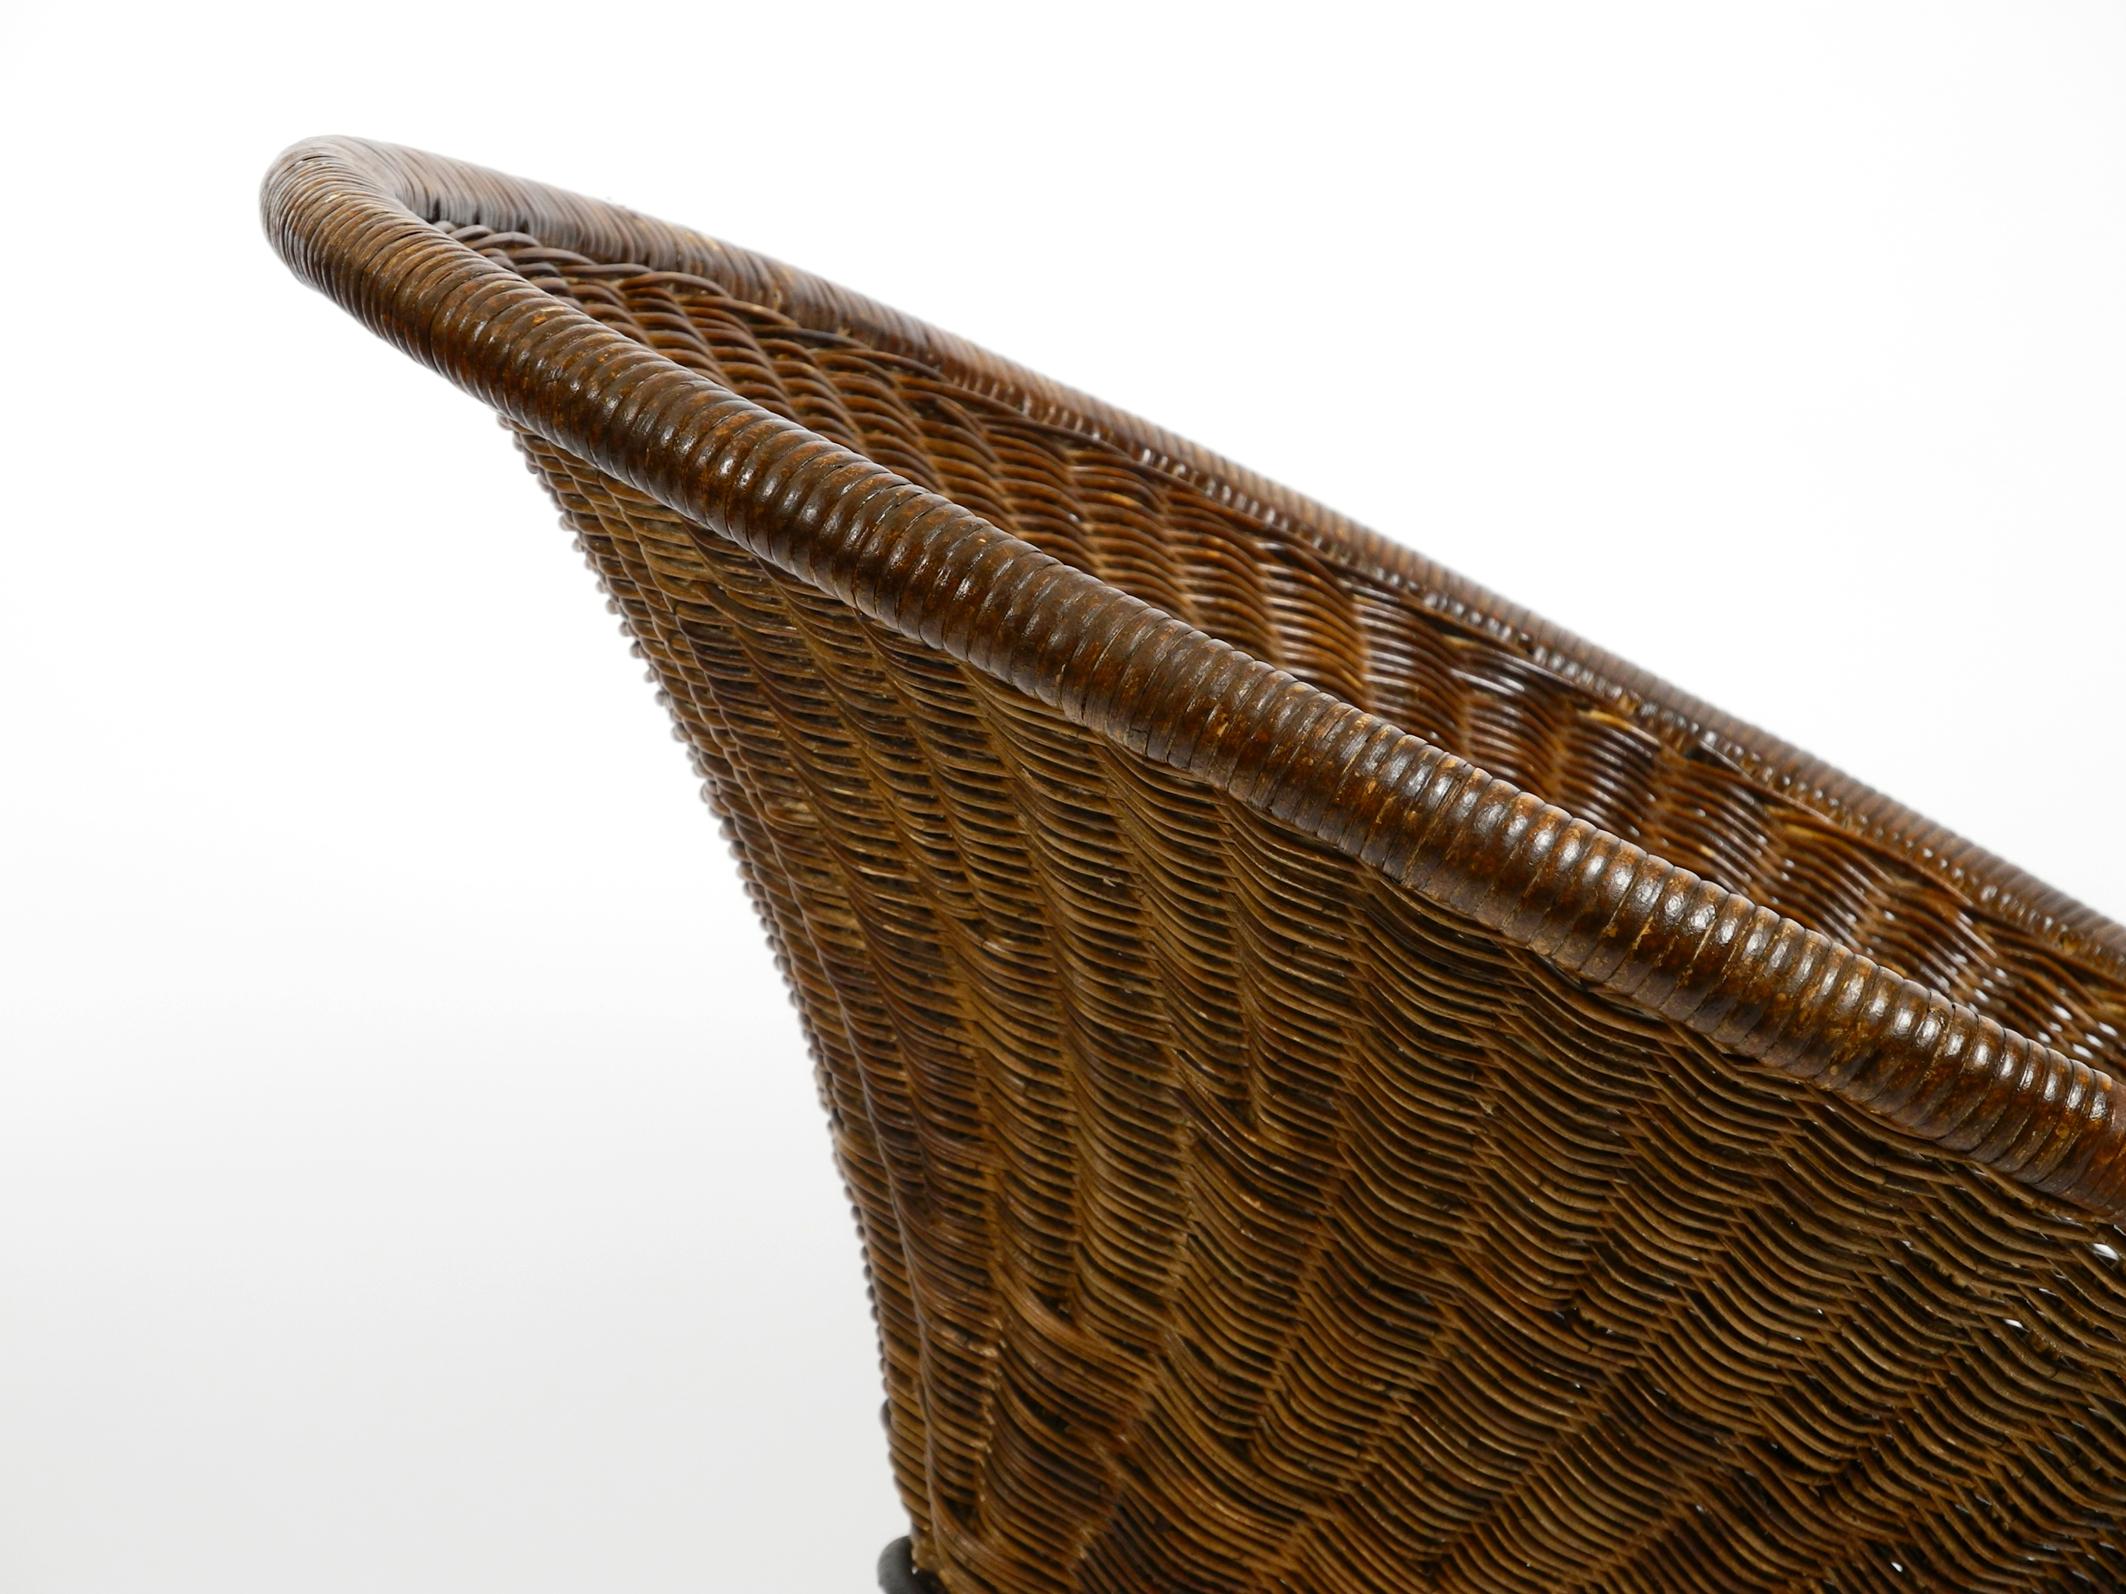 Italian Tripod Mid Century Lounge Basket Chair Made of Wicker by Roberto Mango 1